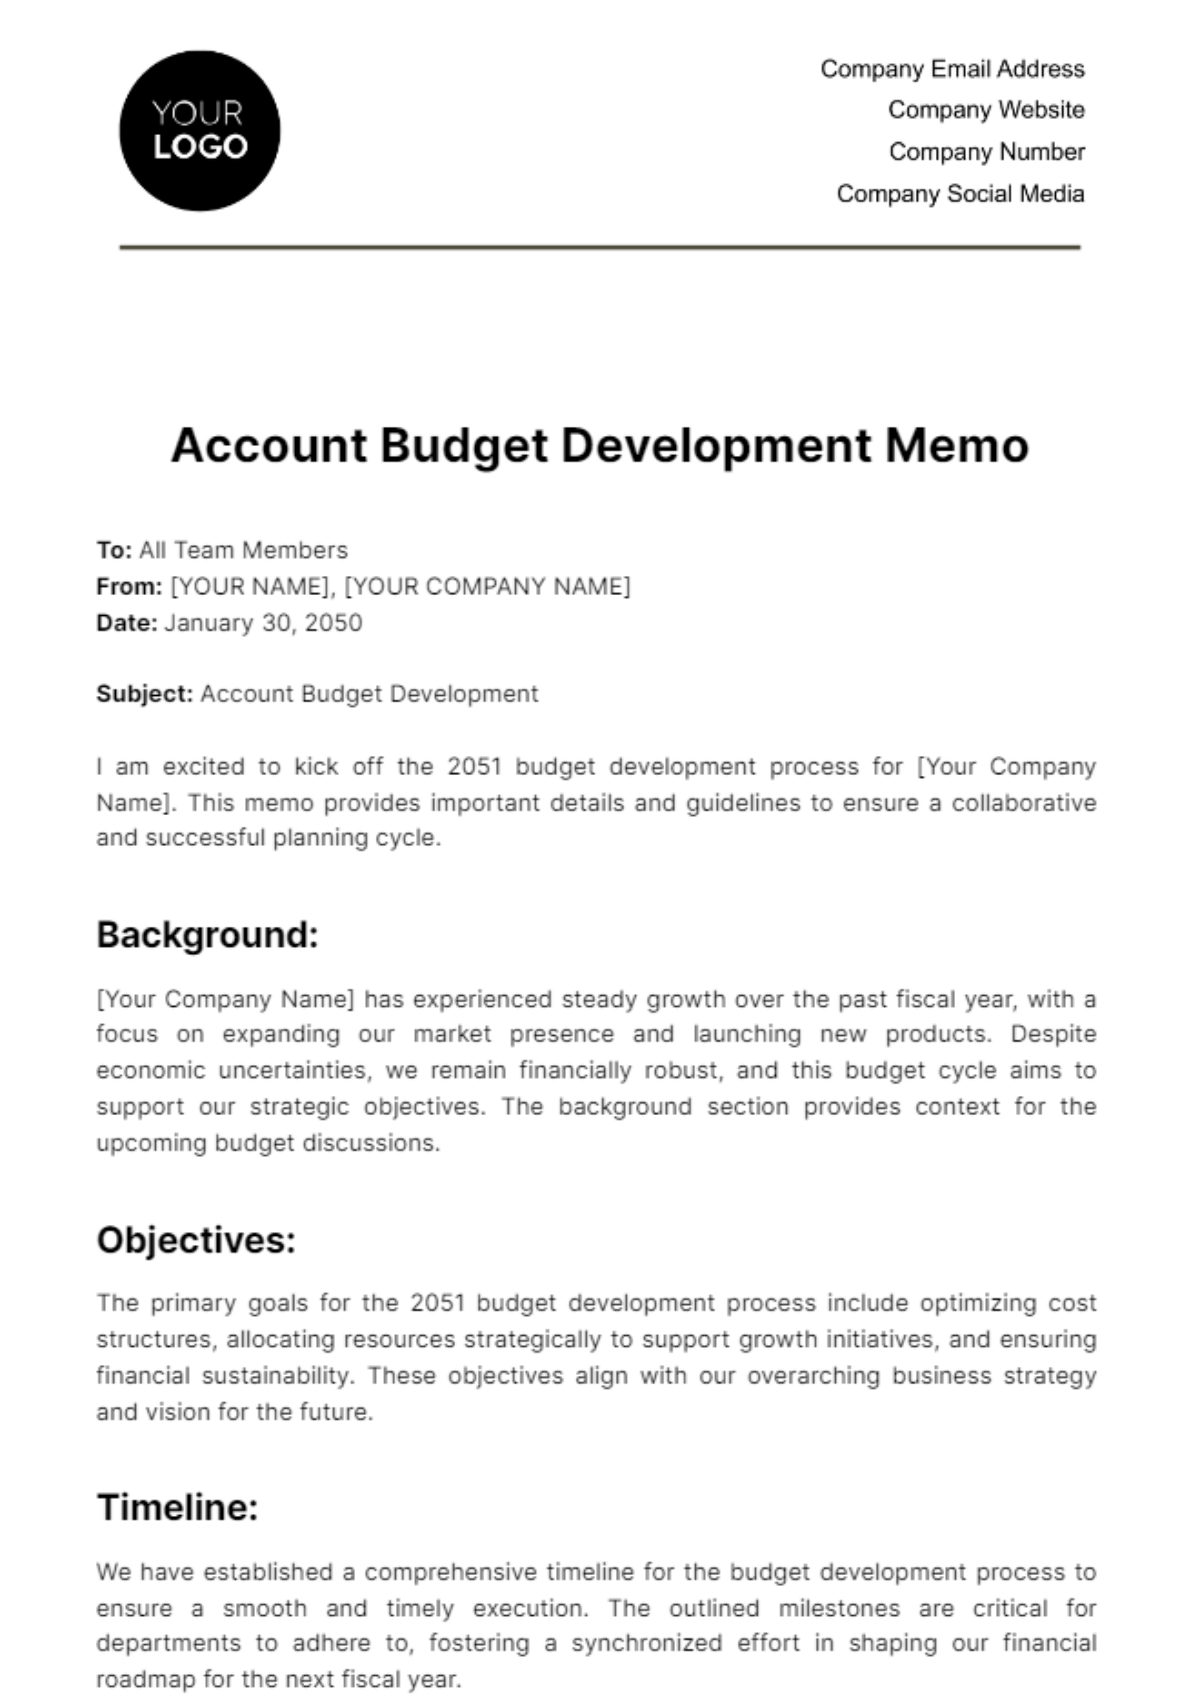 Free Account Budget Development Memo Template